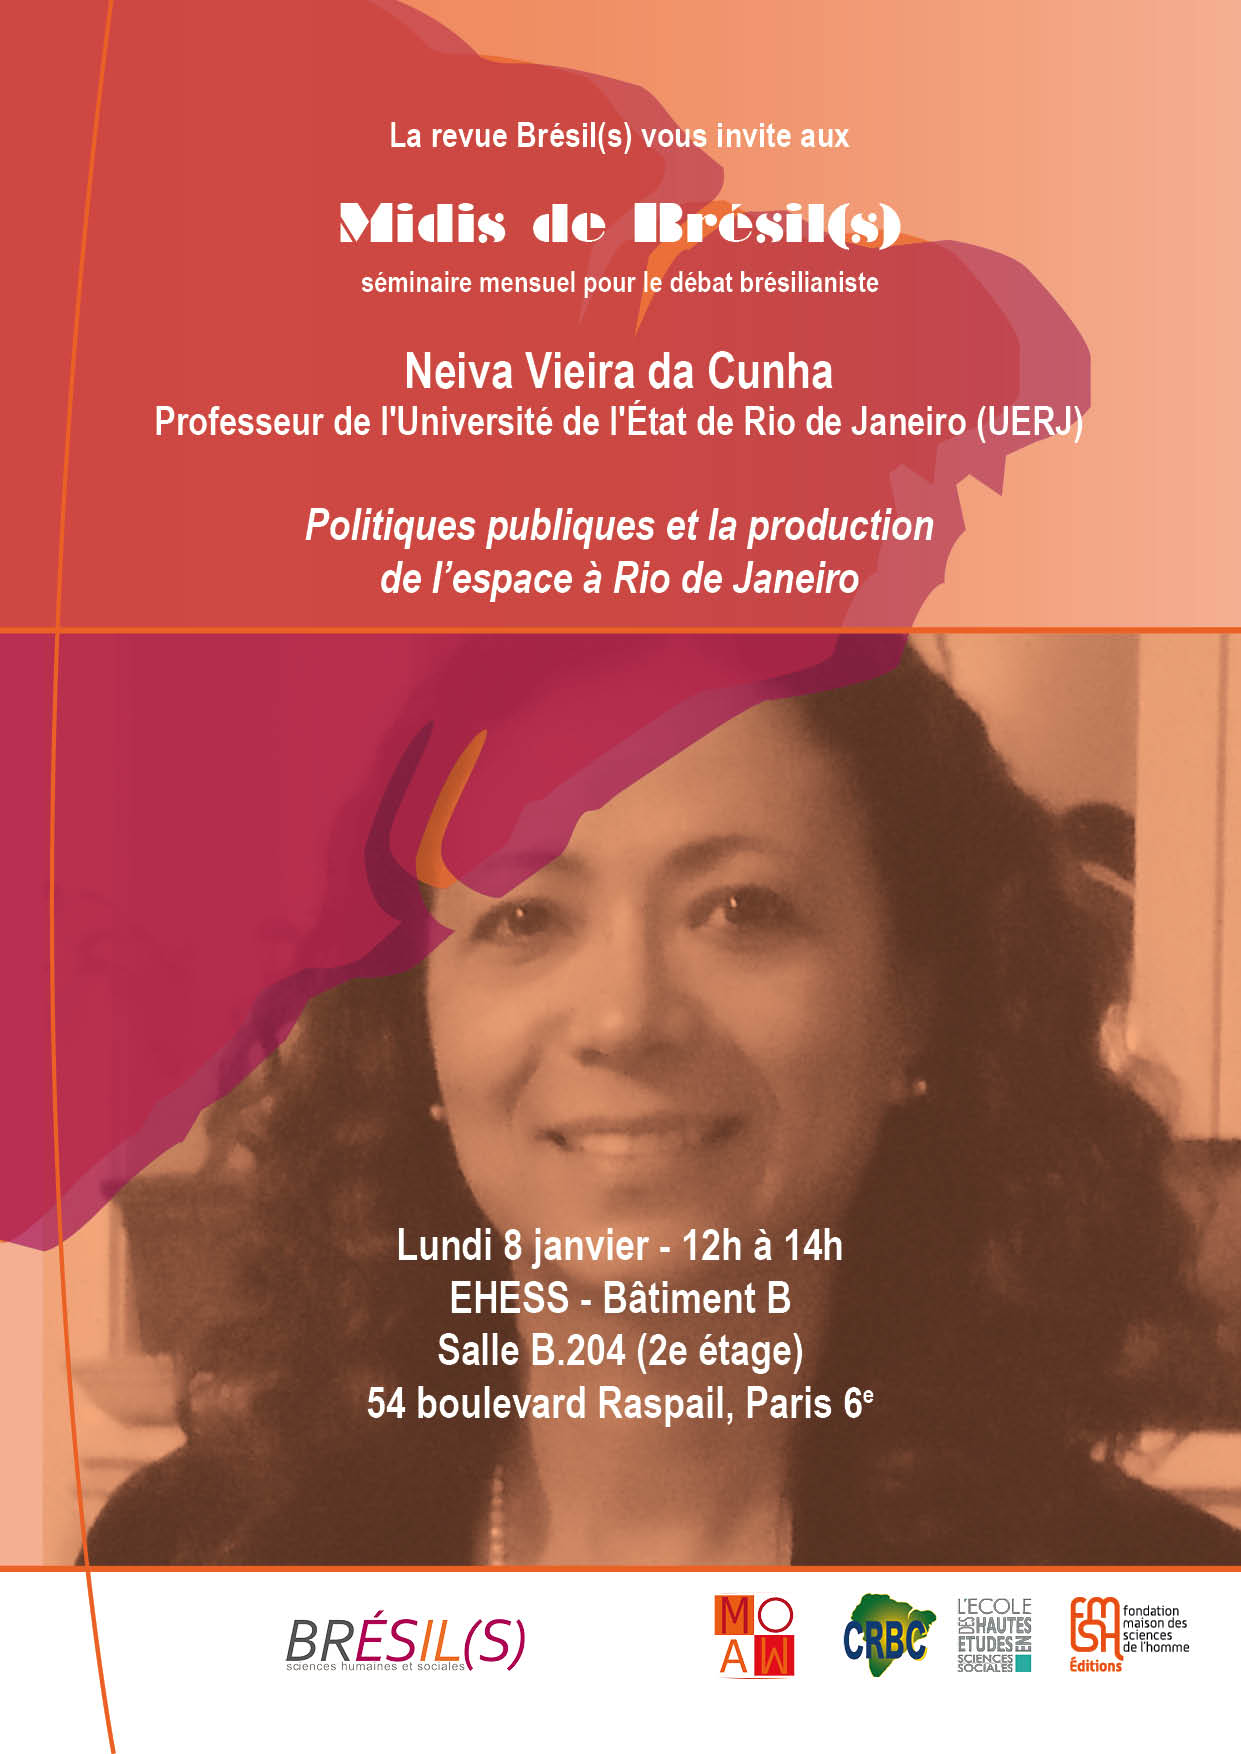 Les Midis de Brésil(s) - Neiva Vieira da Cunha, professeur de l'Université de l'État de Rio de Janeiro (UERJ):